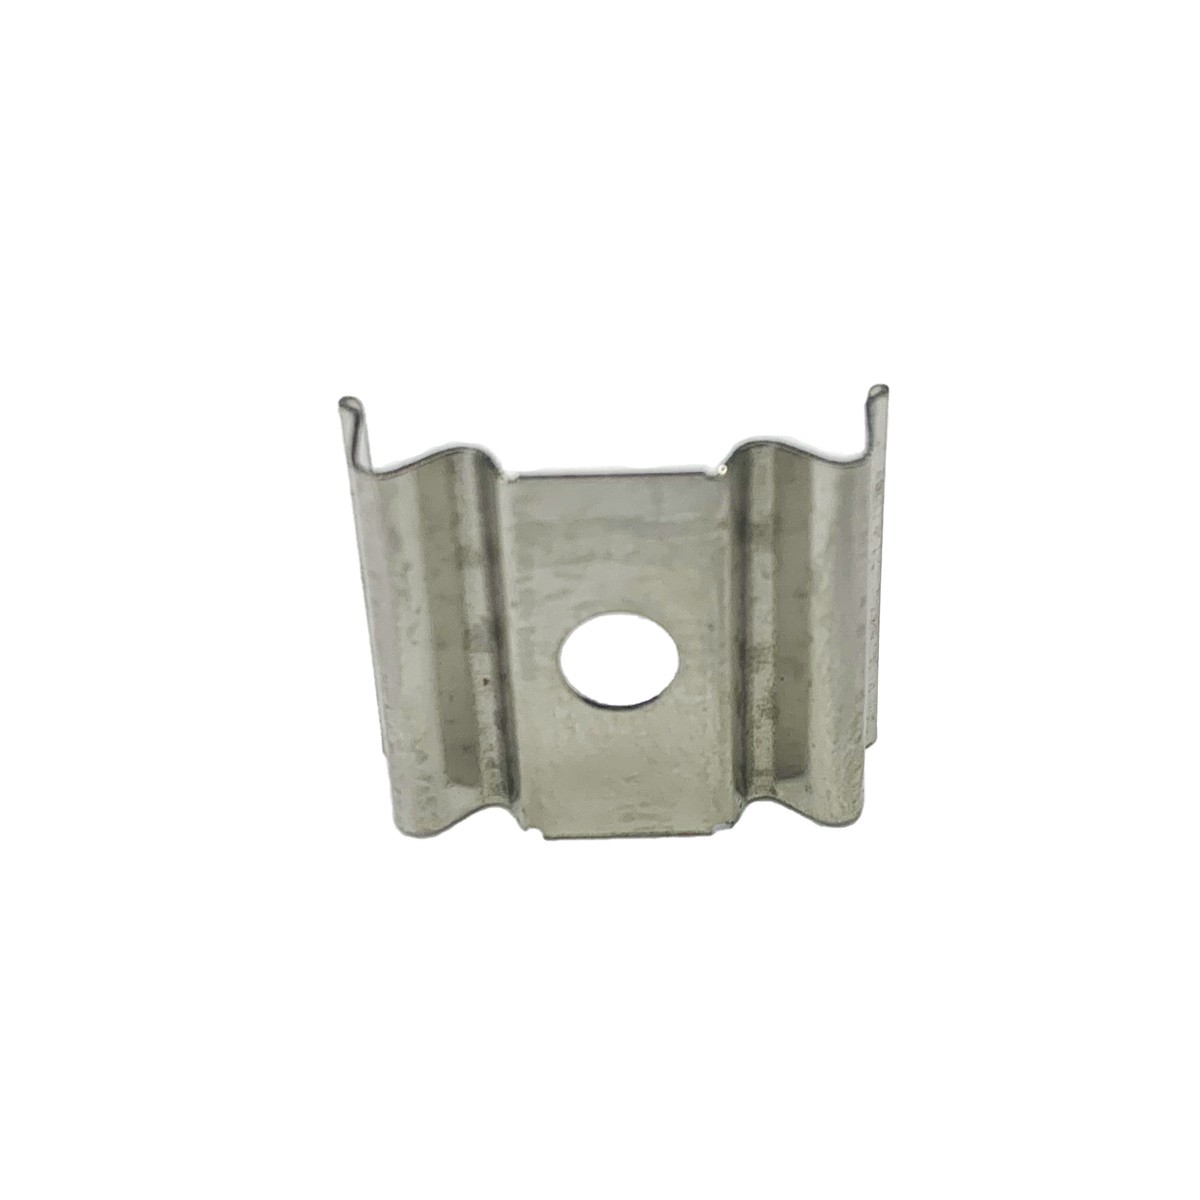 Metal mounting clip for aluminium double LED strip profile BPERFALP196